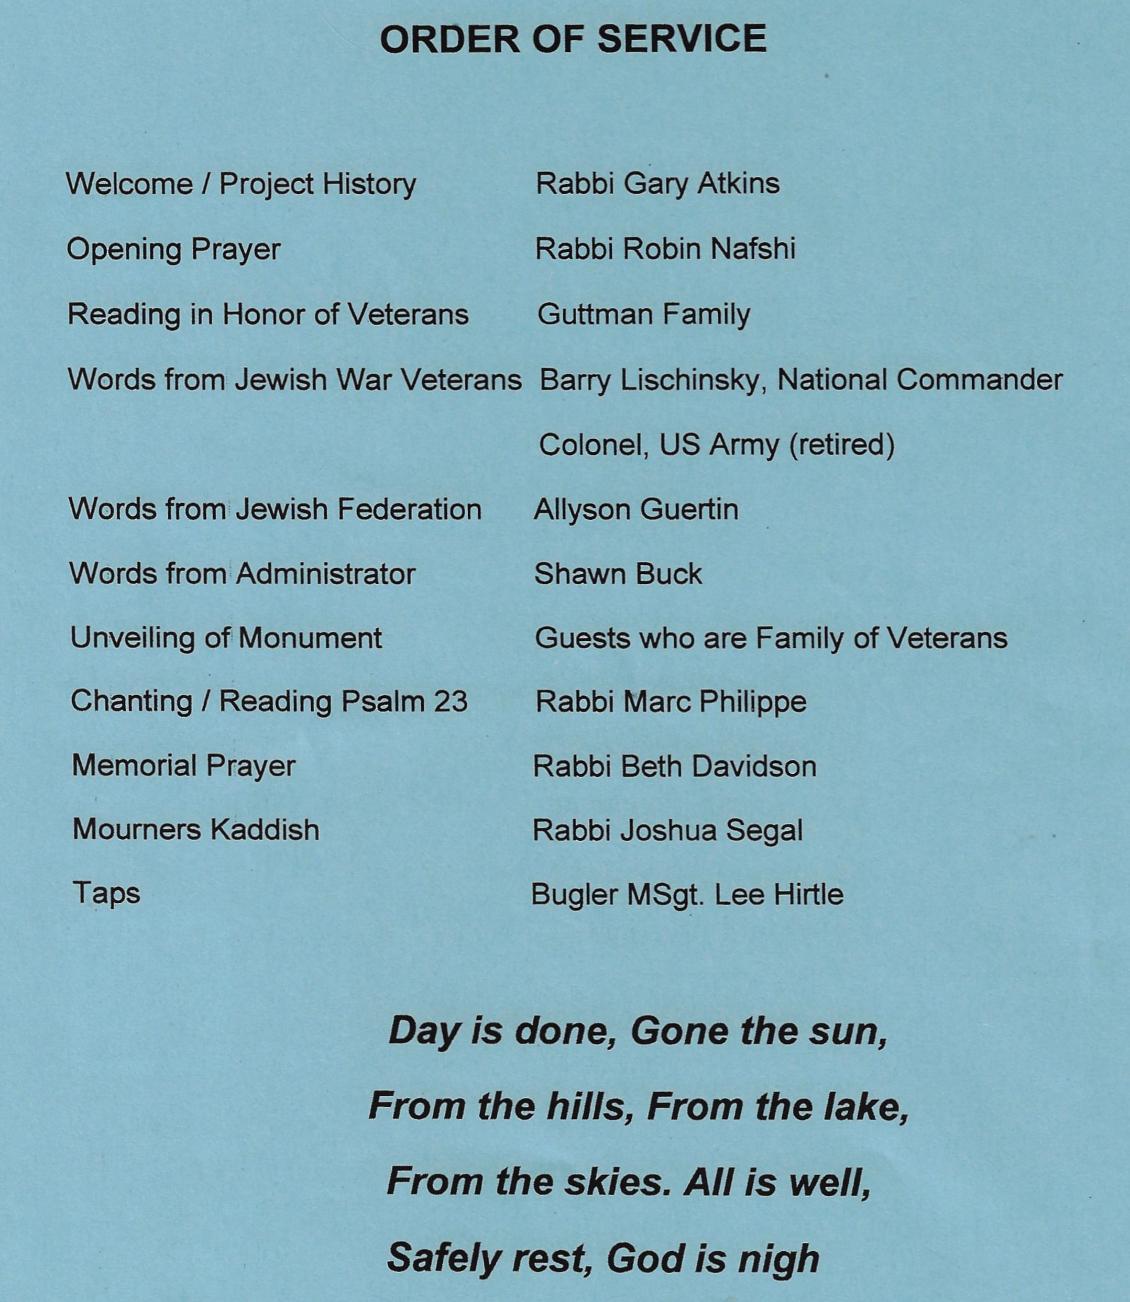 NH Jewish War Veterans Memorial Dedication - NH STate Veterans Cemetery Oct 15 2023